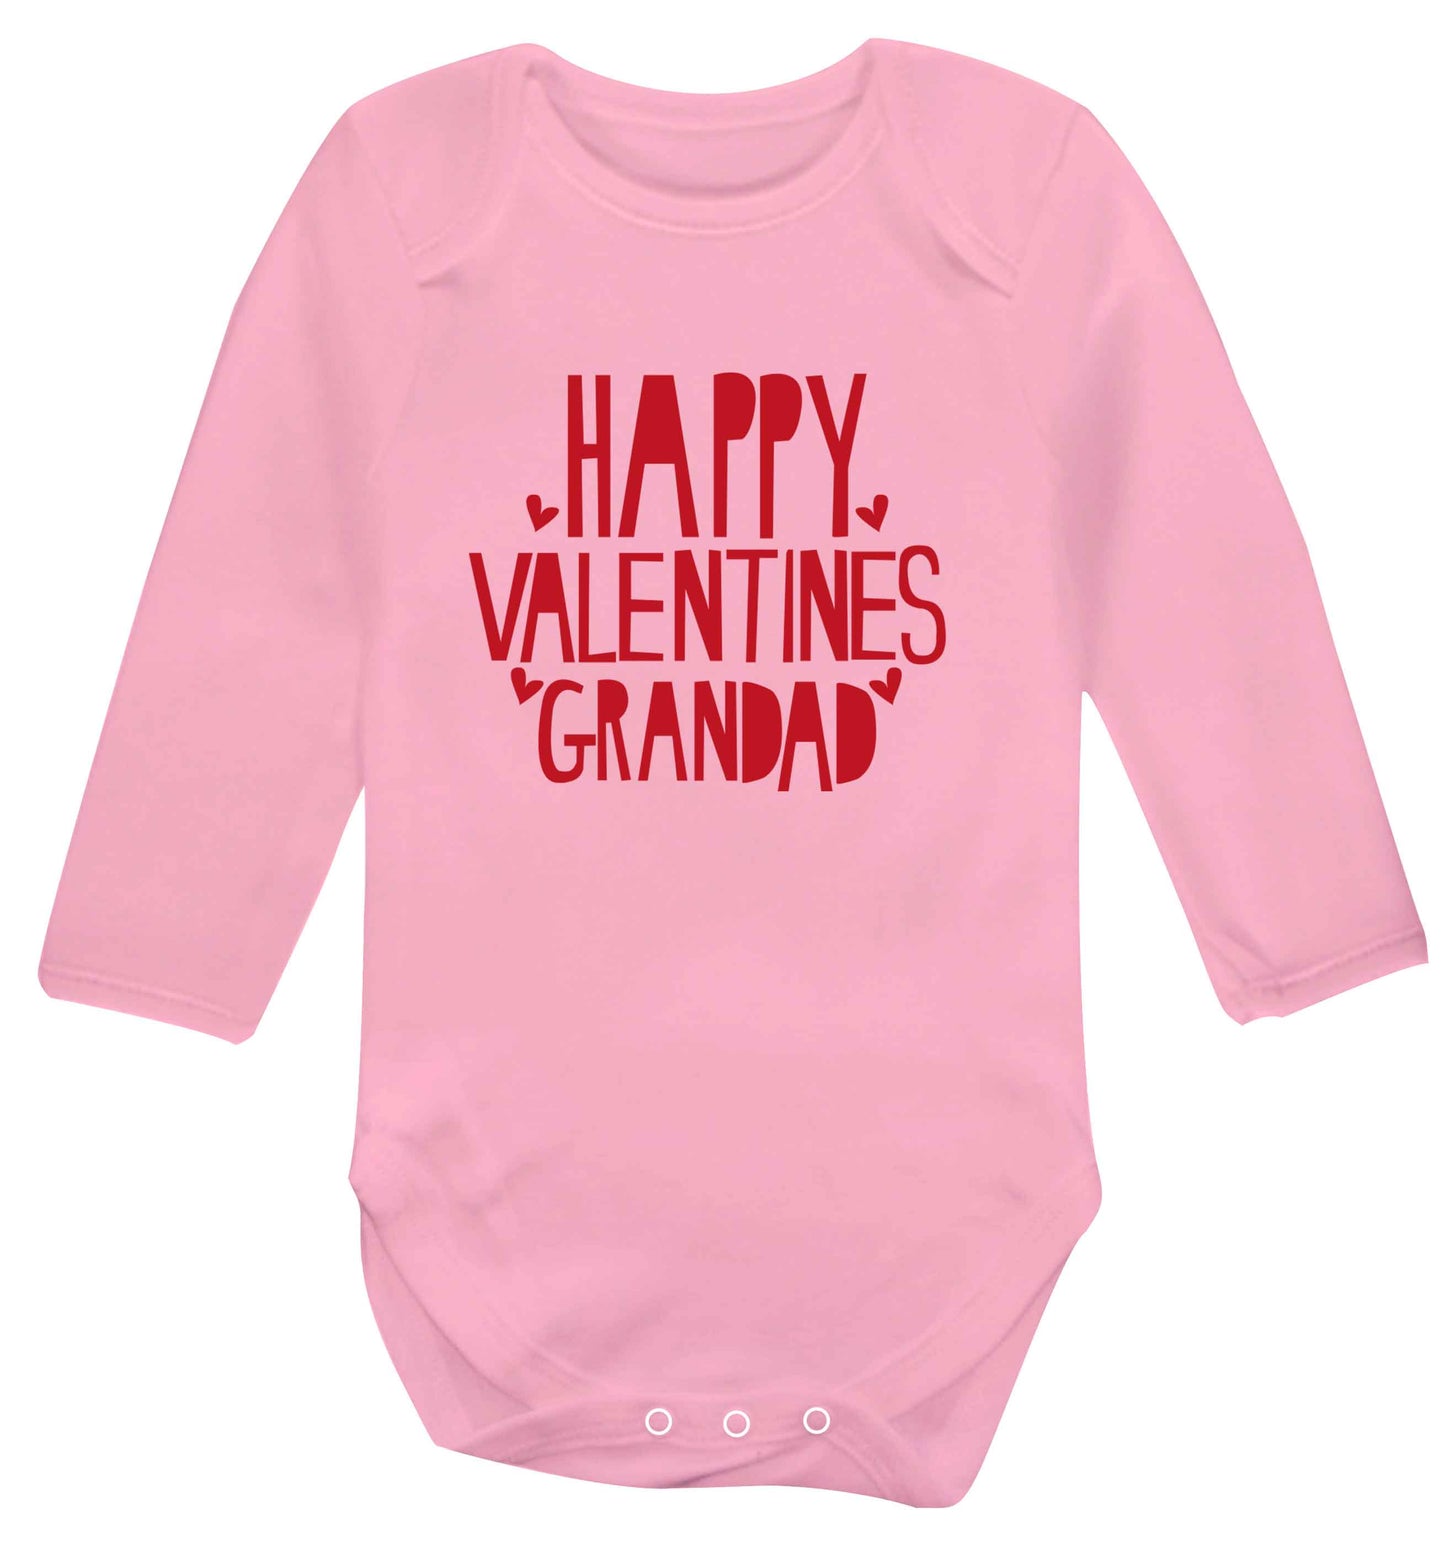 Happy valentines grandad baby vest long sleeved pale pink 6-12 months